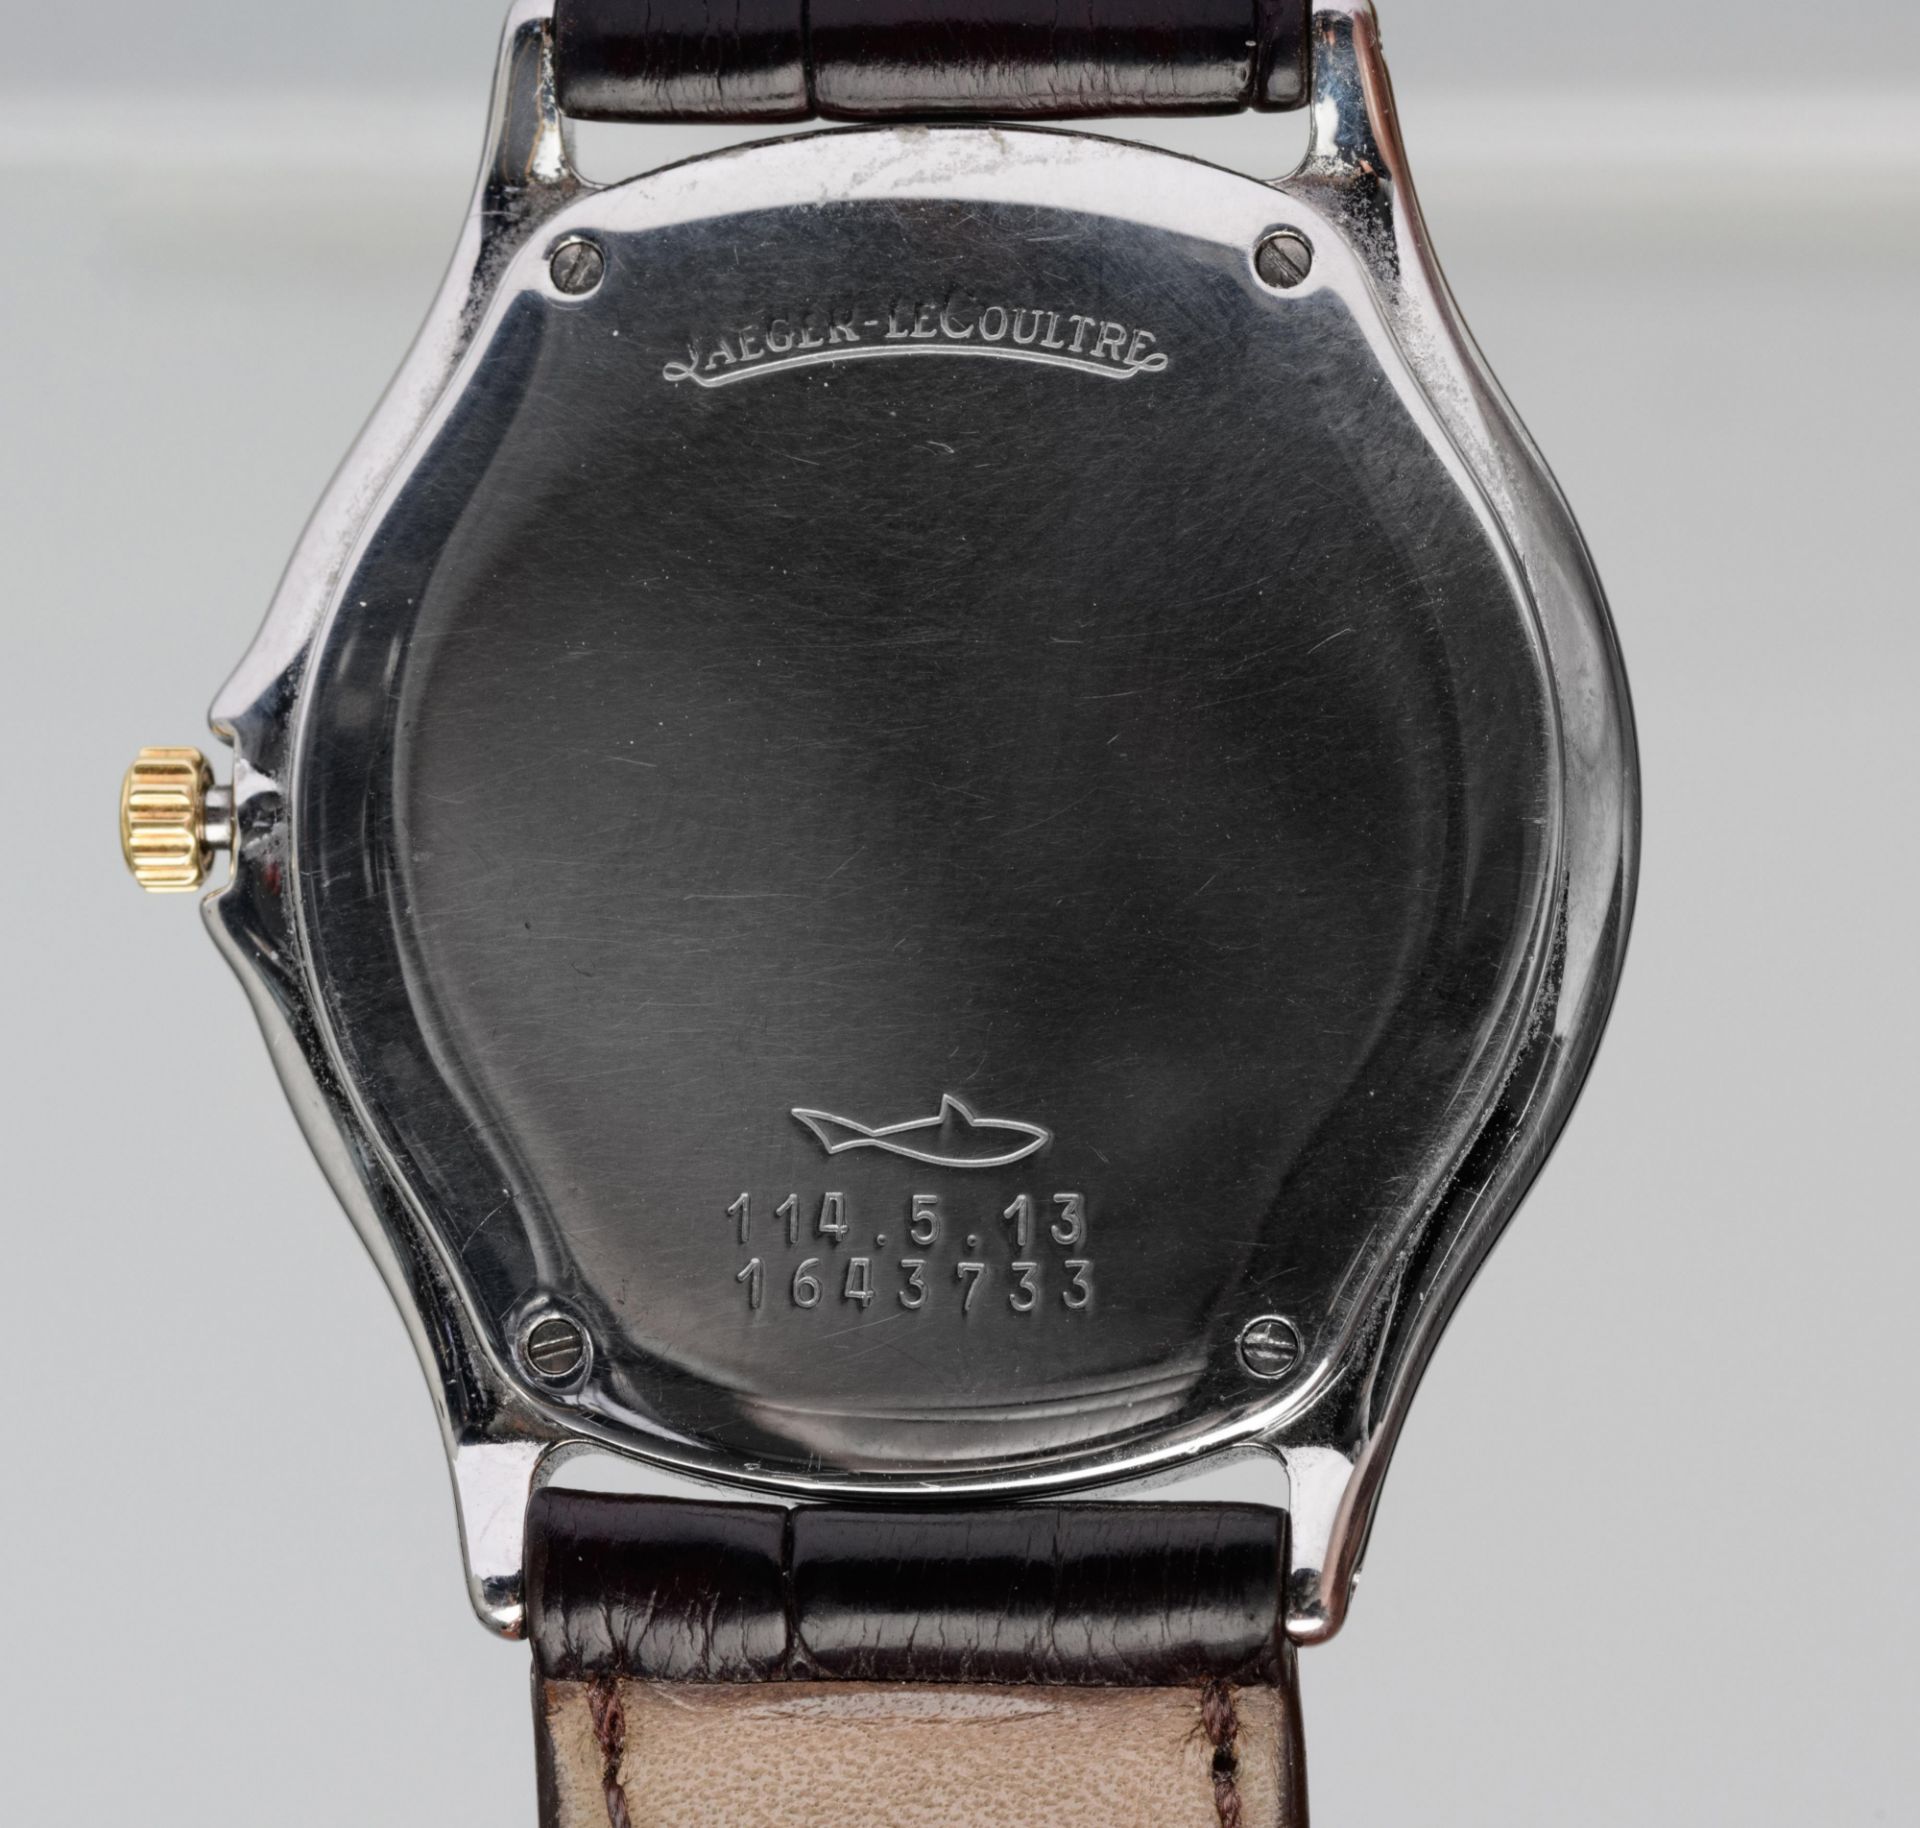 A Jeager-Lecoultre ladies wristwatch, serial-nr. 114.5.13 - 1643733 - Bild 5 aus 8